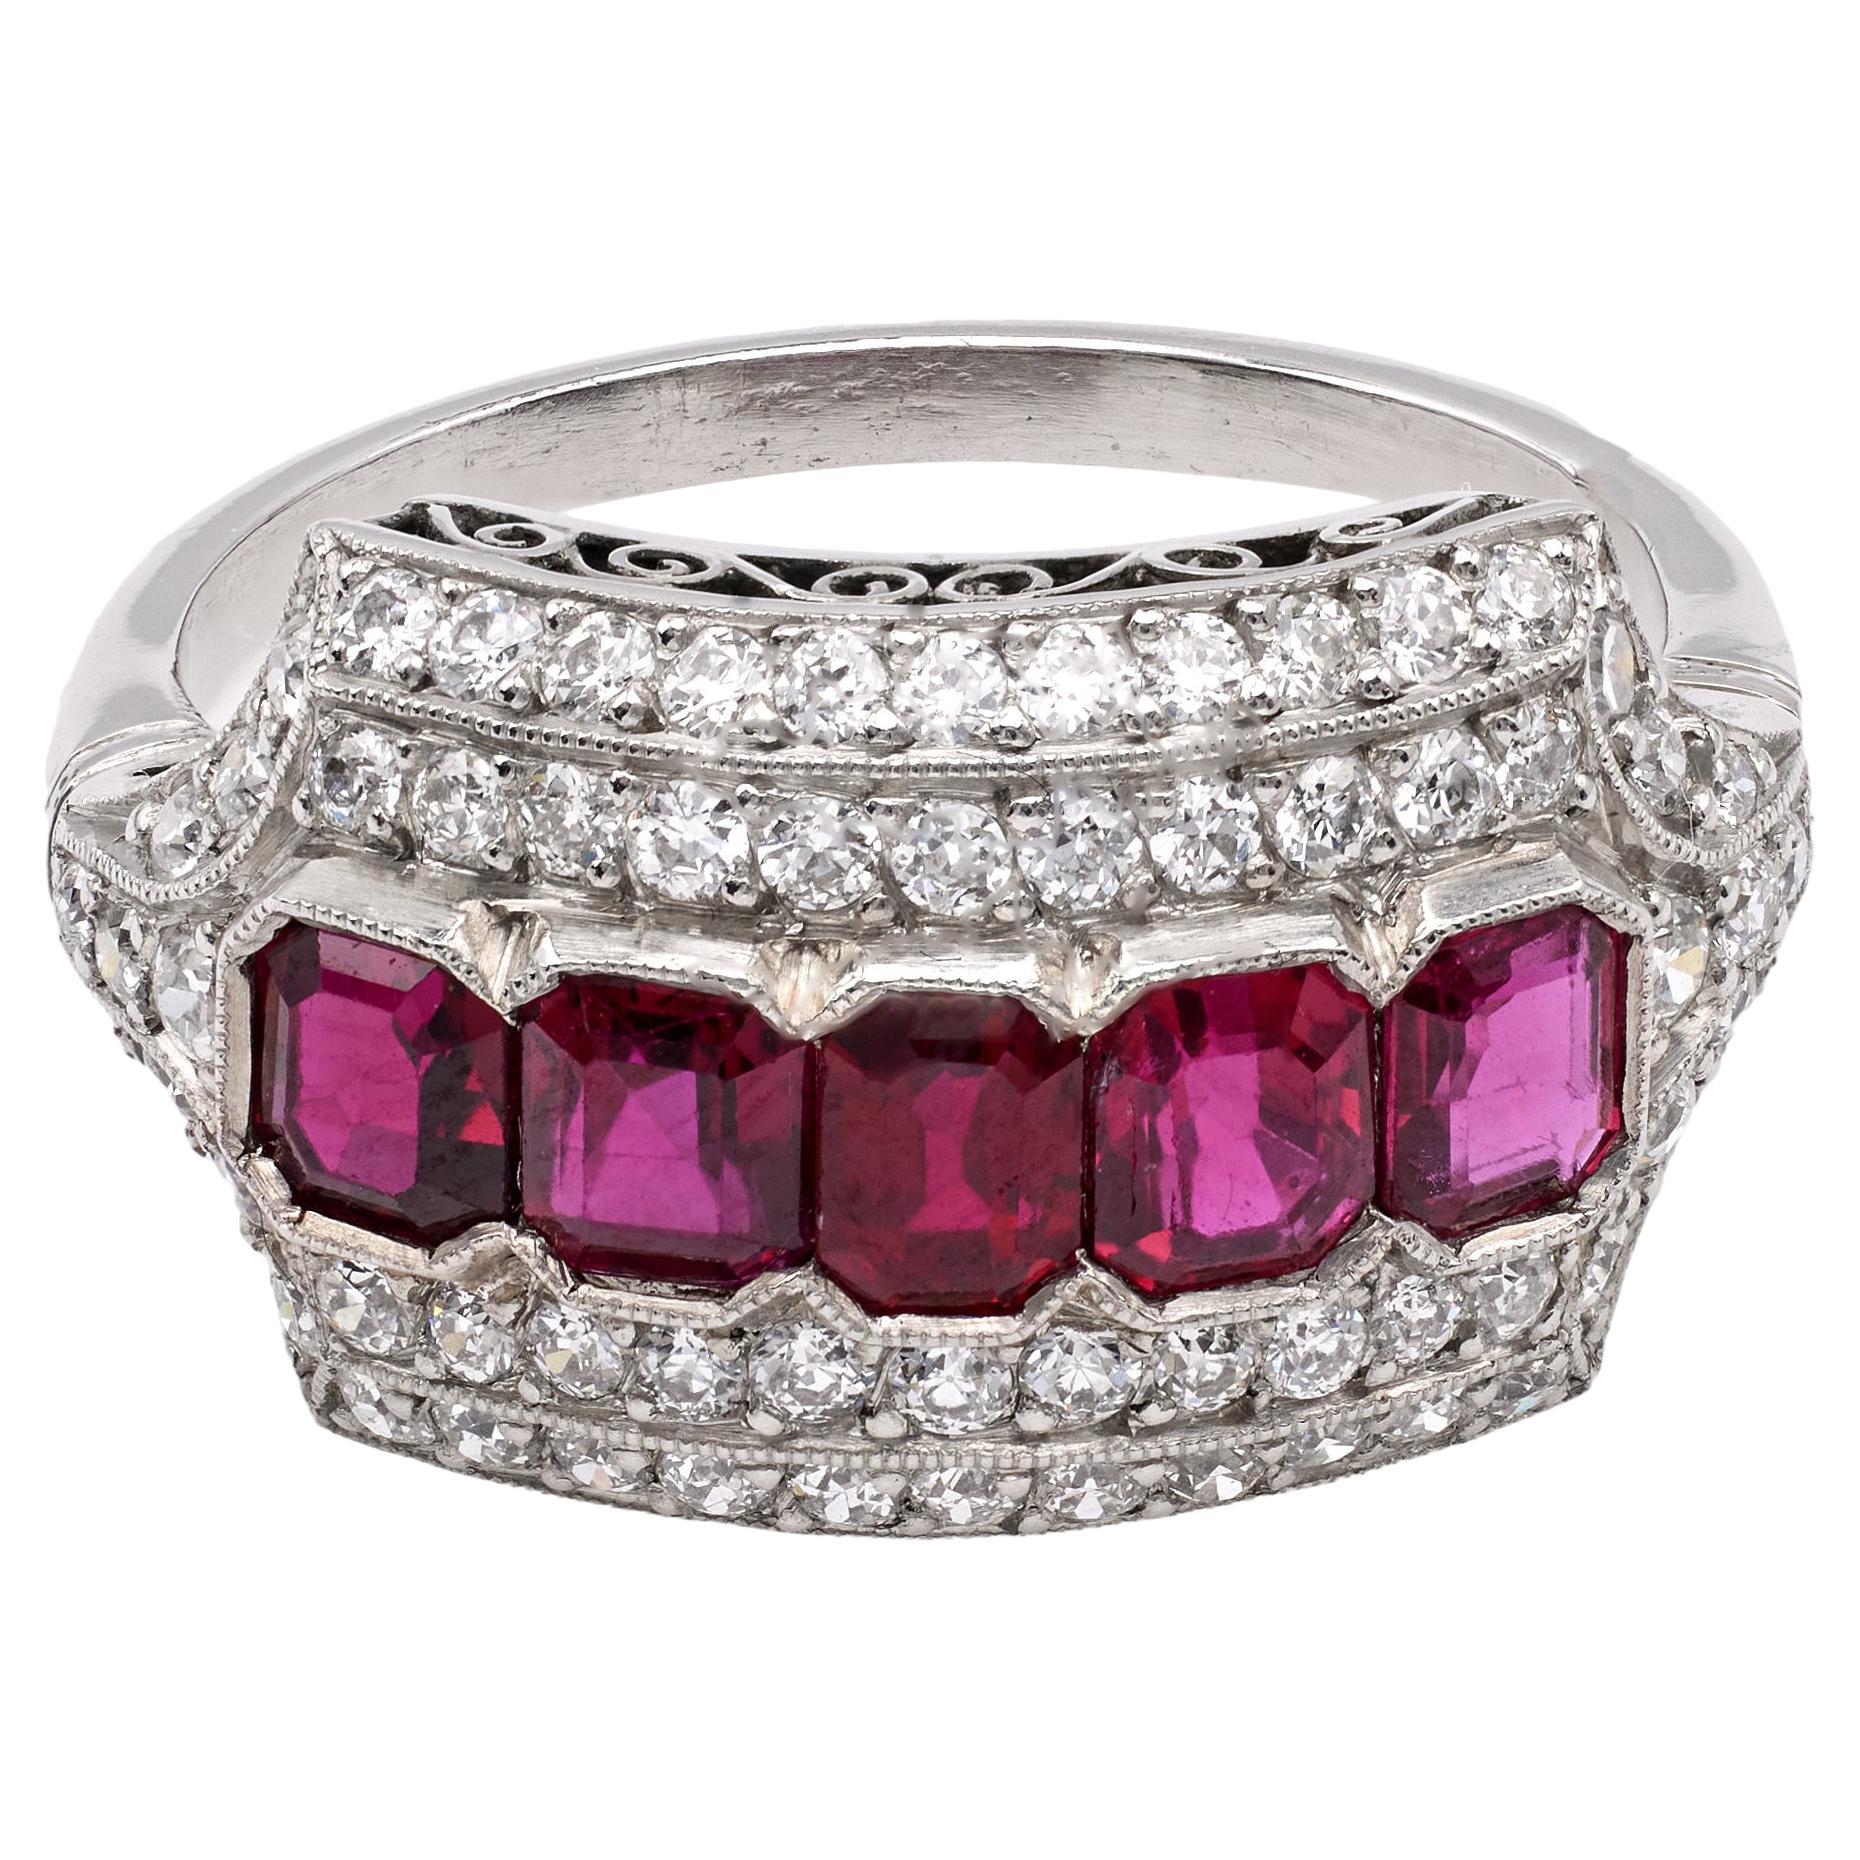 Art Deco Inspired Ruby and Diamond Platinum Ring